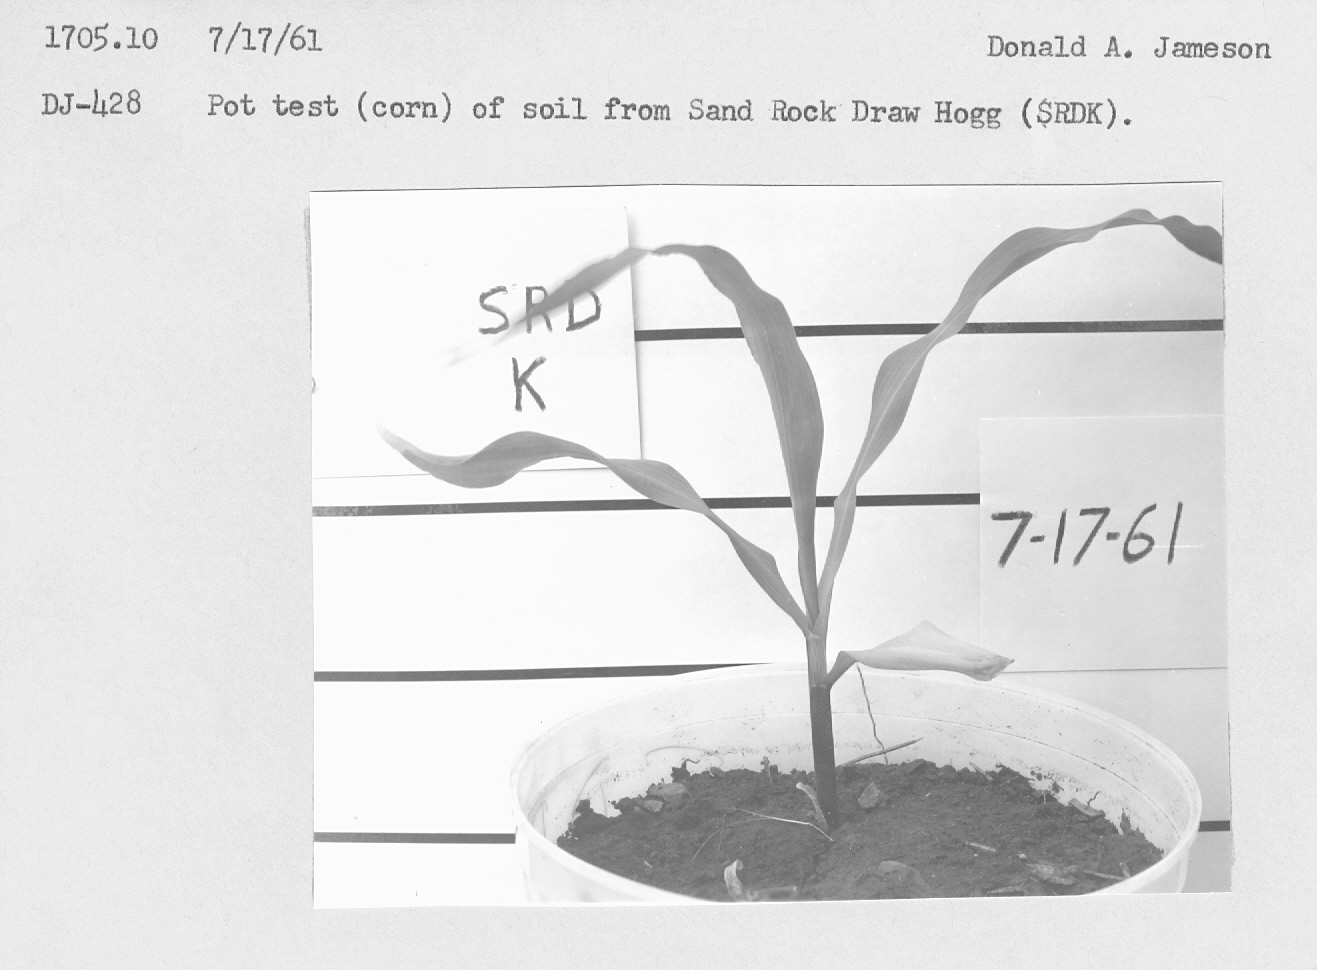 Pot test (corn) of soil from Sand Rock Draw Hogg (SRDK).